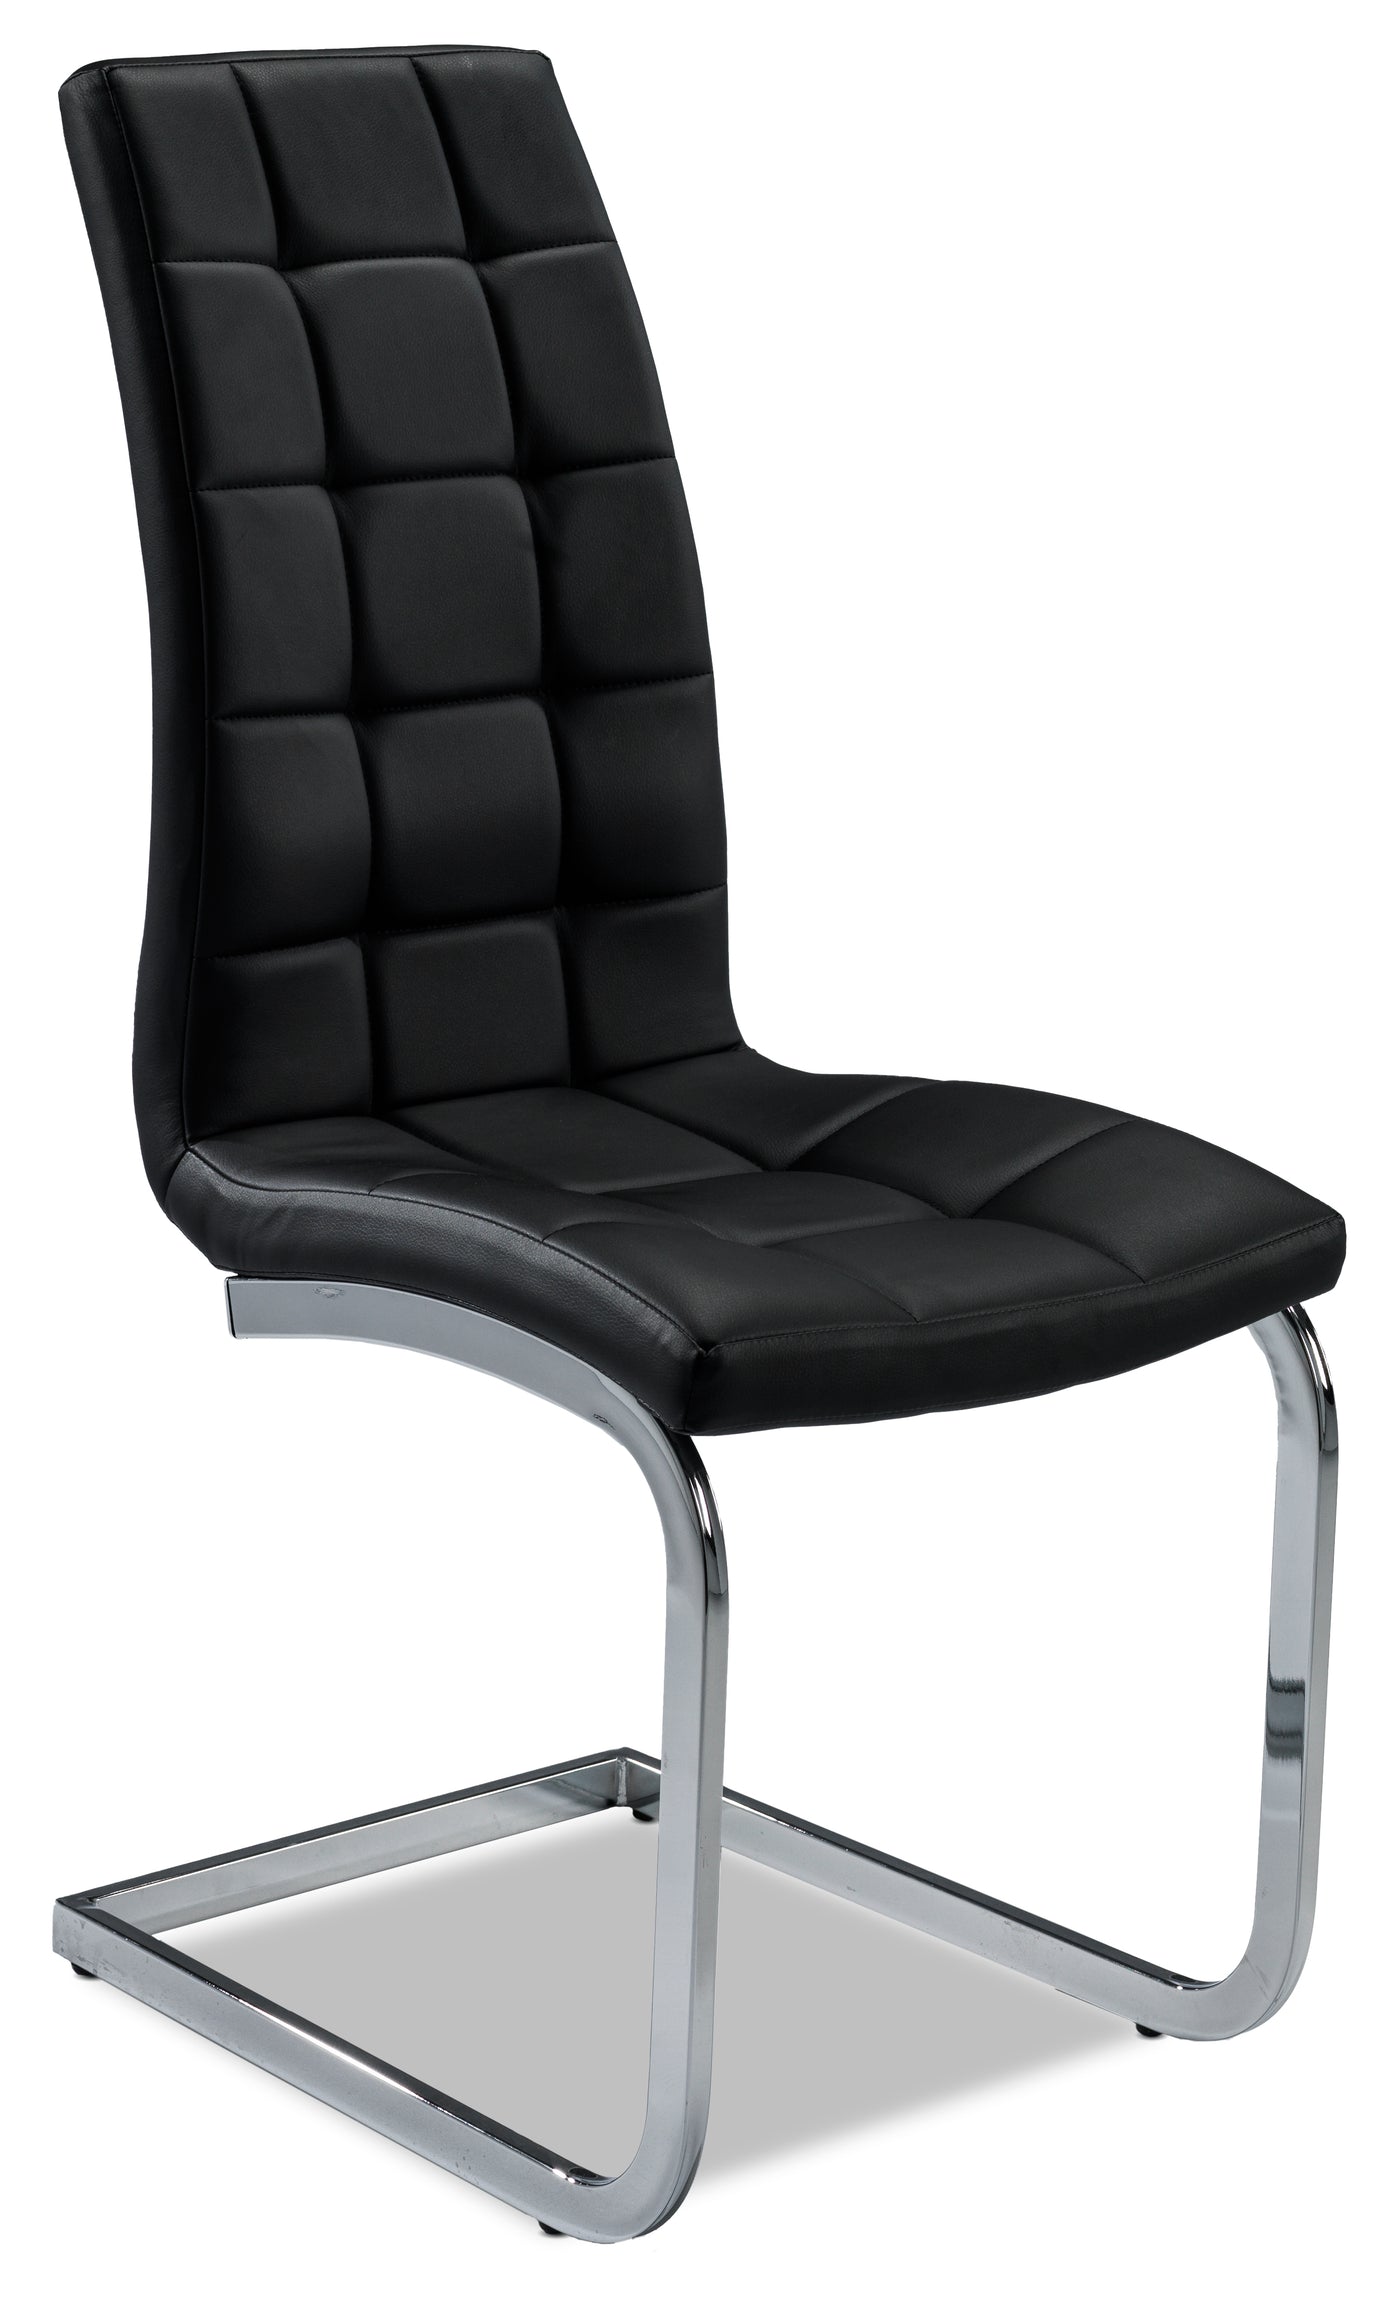 Padria Side Chair - Black